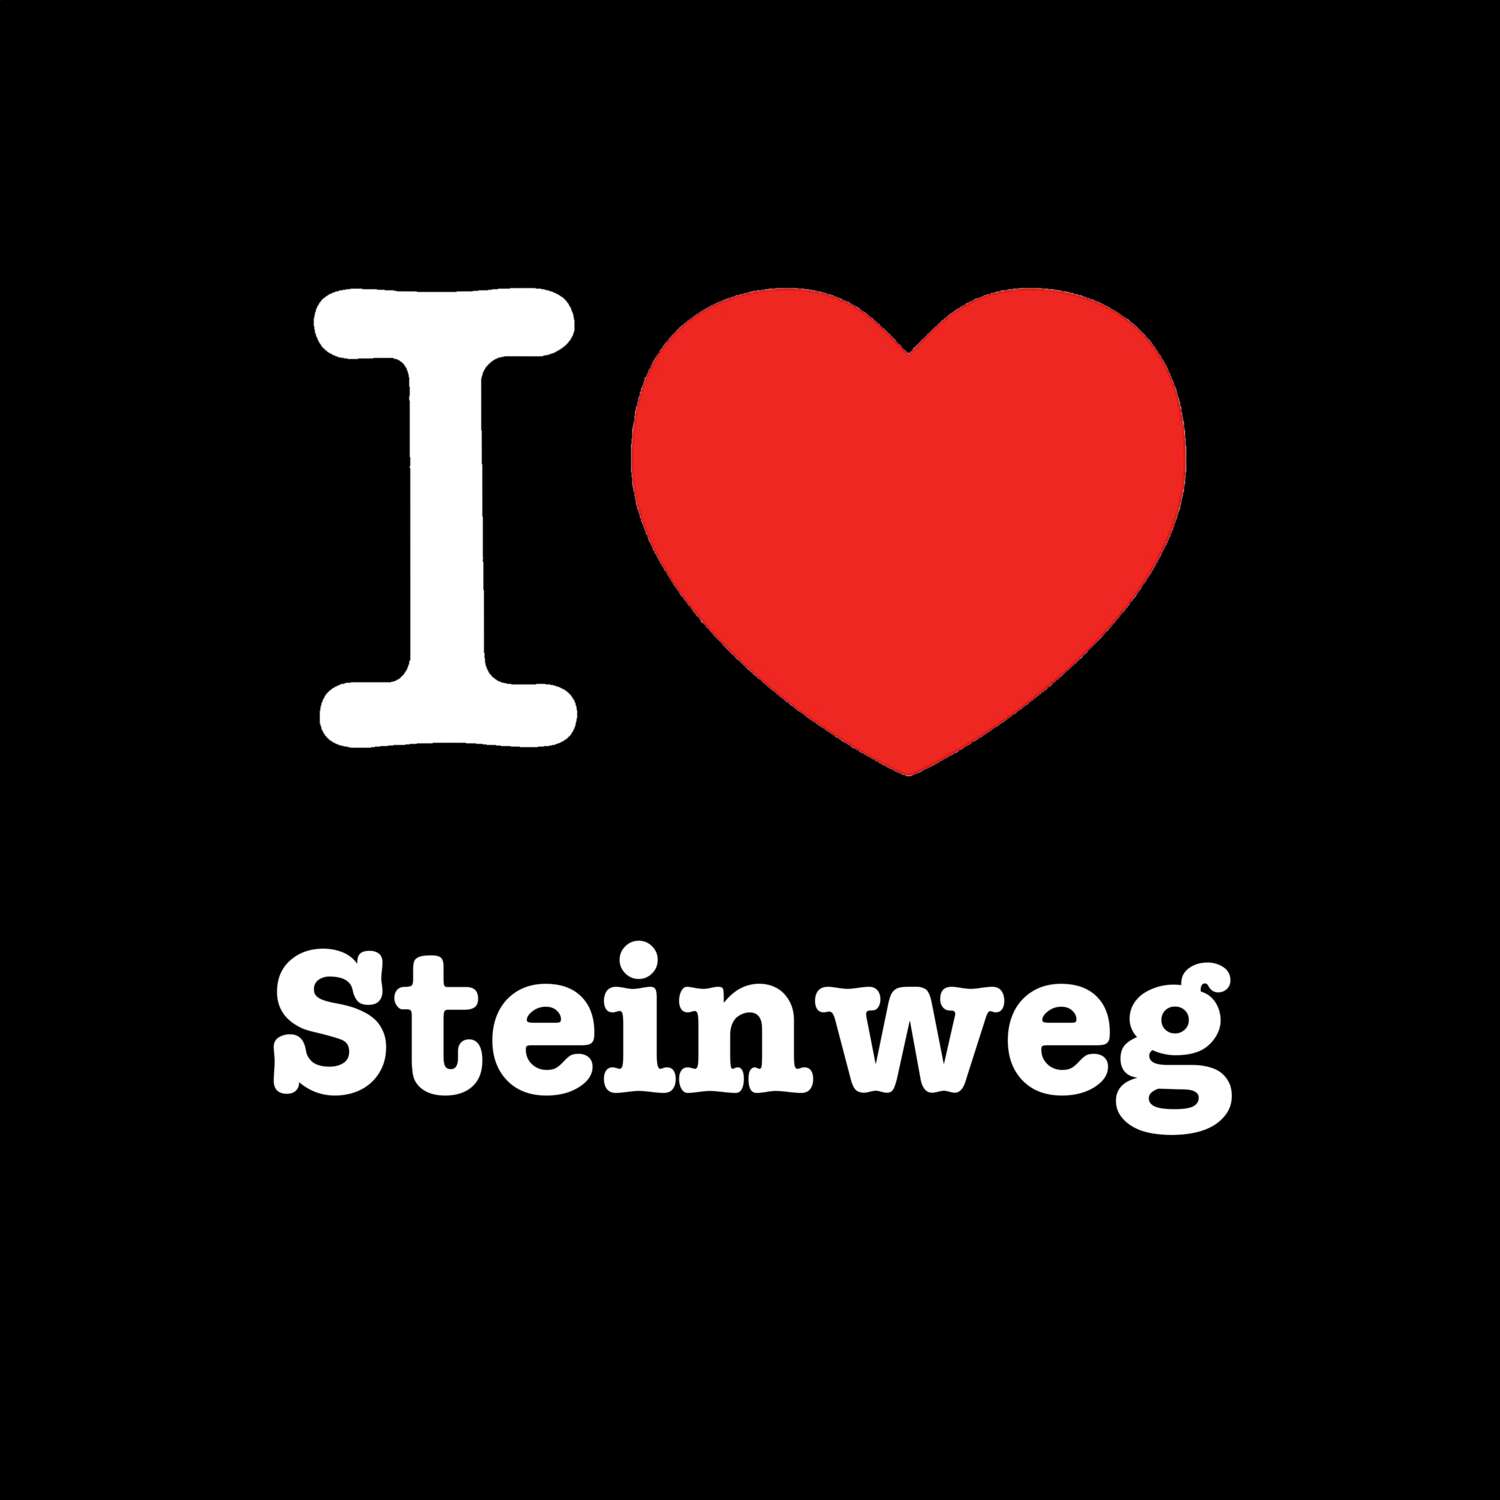 Steinweg T-Shirt »I love«